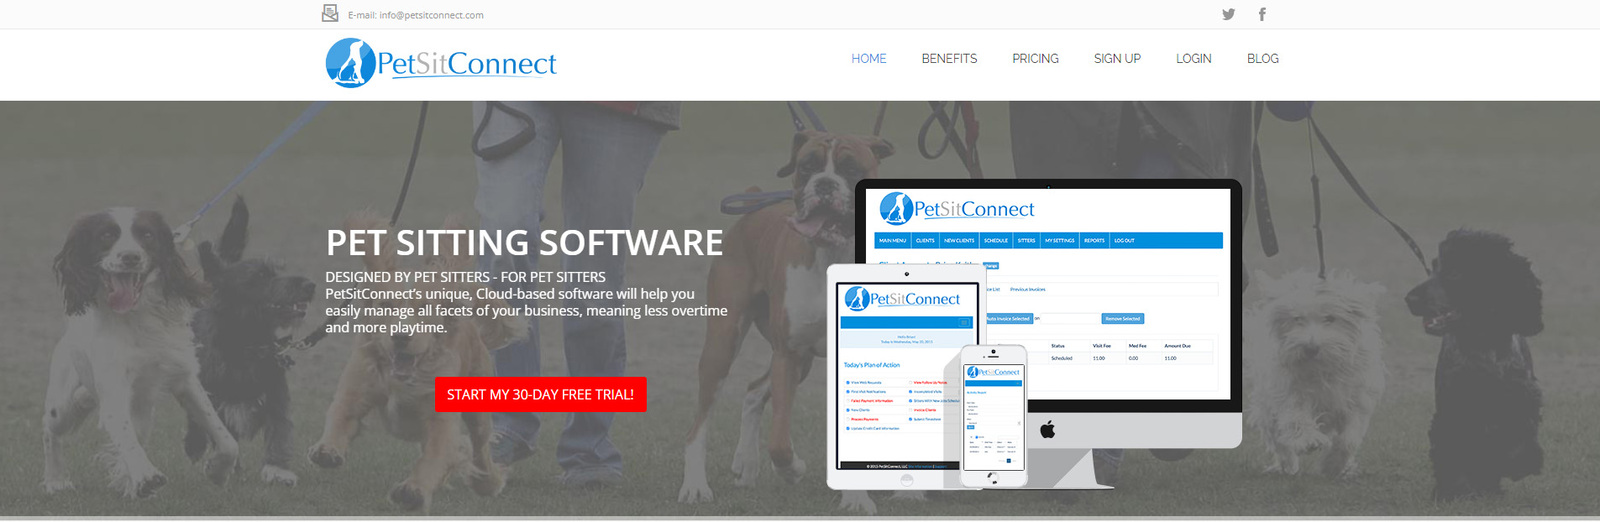 Istantanea di PetSitConnect, un'app di pet sitter di prim'ordine.